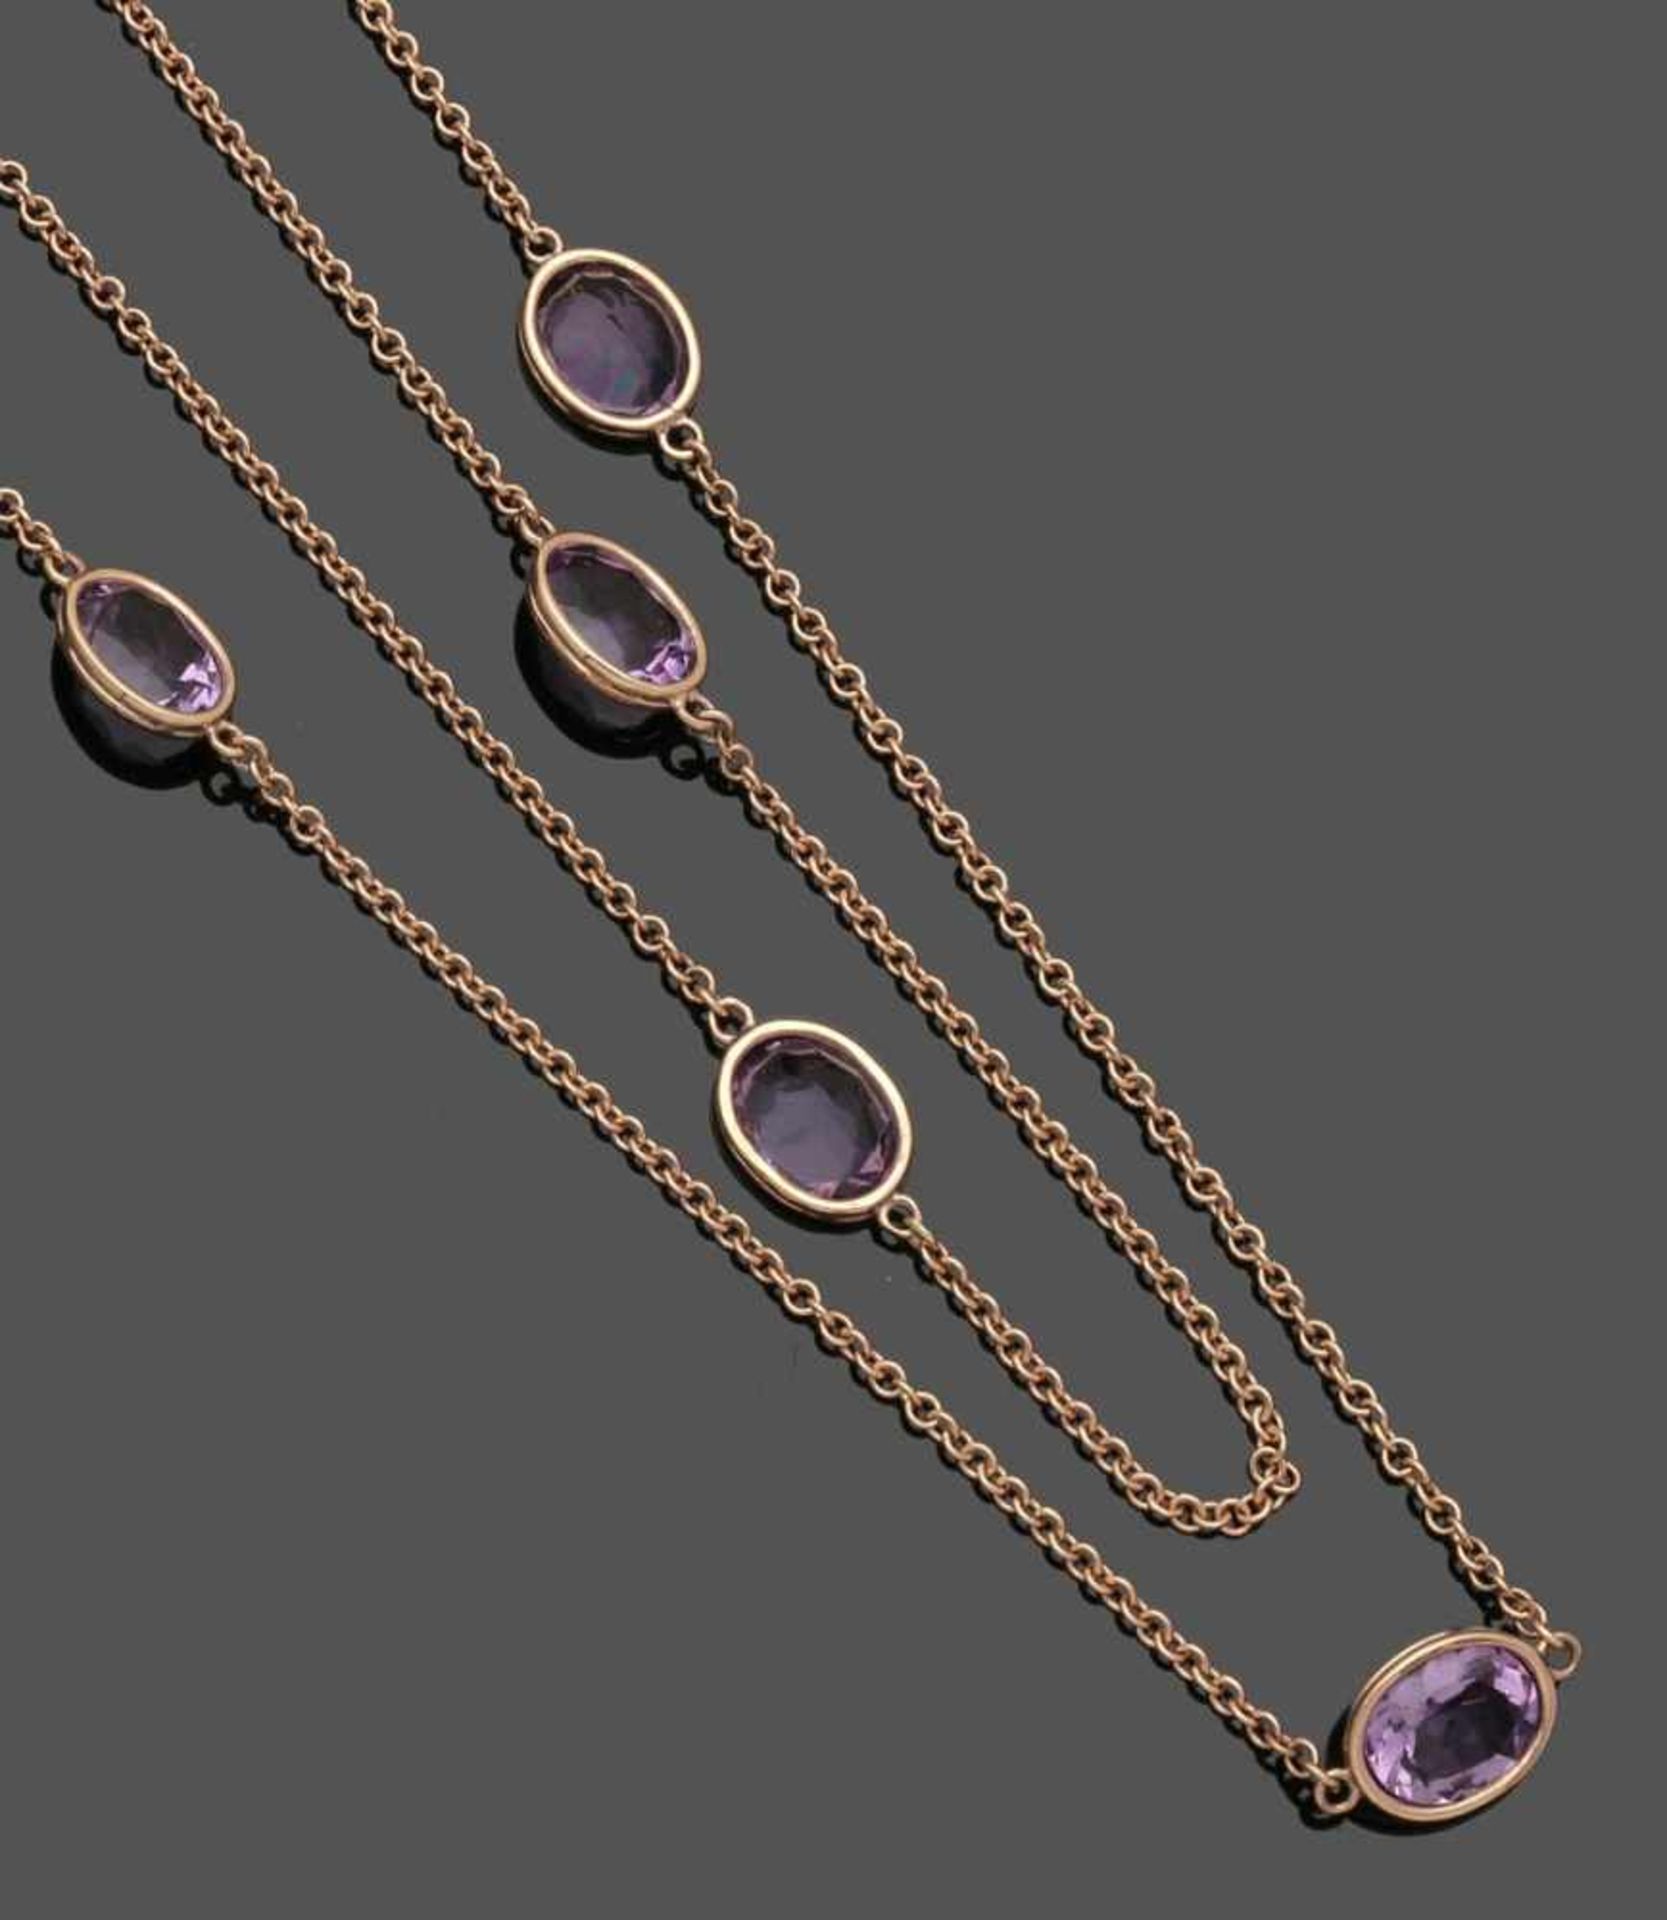 Langes Amethystcollier An amethyste necklace 375er Roségold, gestemp. 11 Amethyste im ovalen Schliff